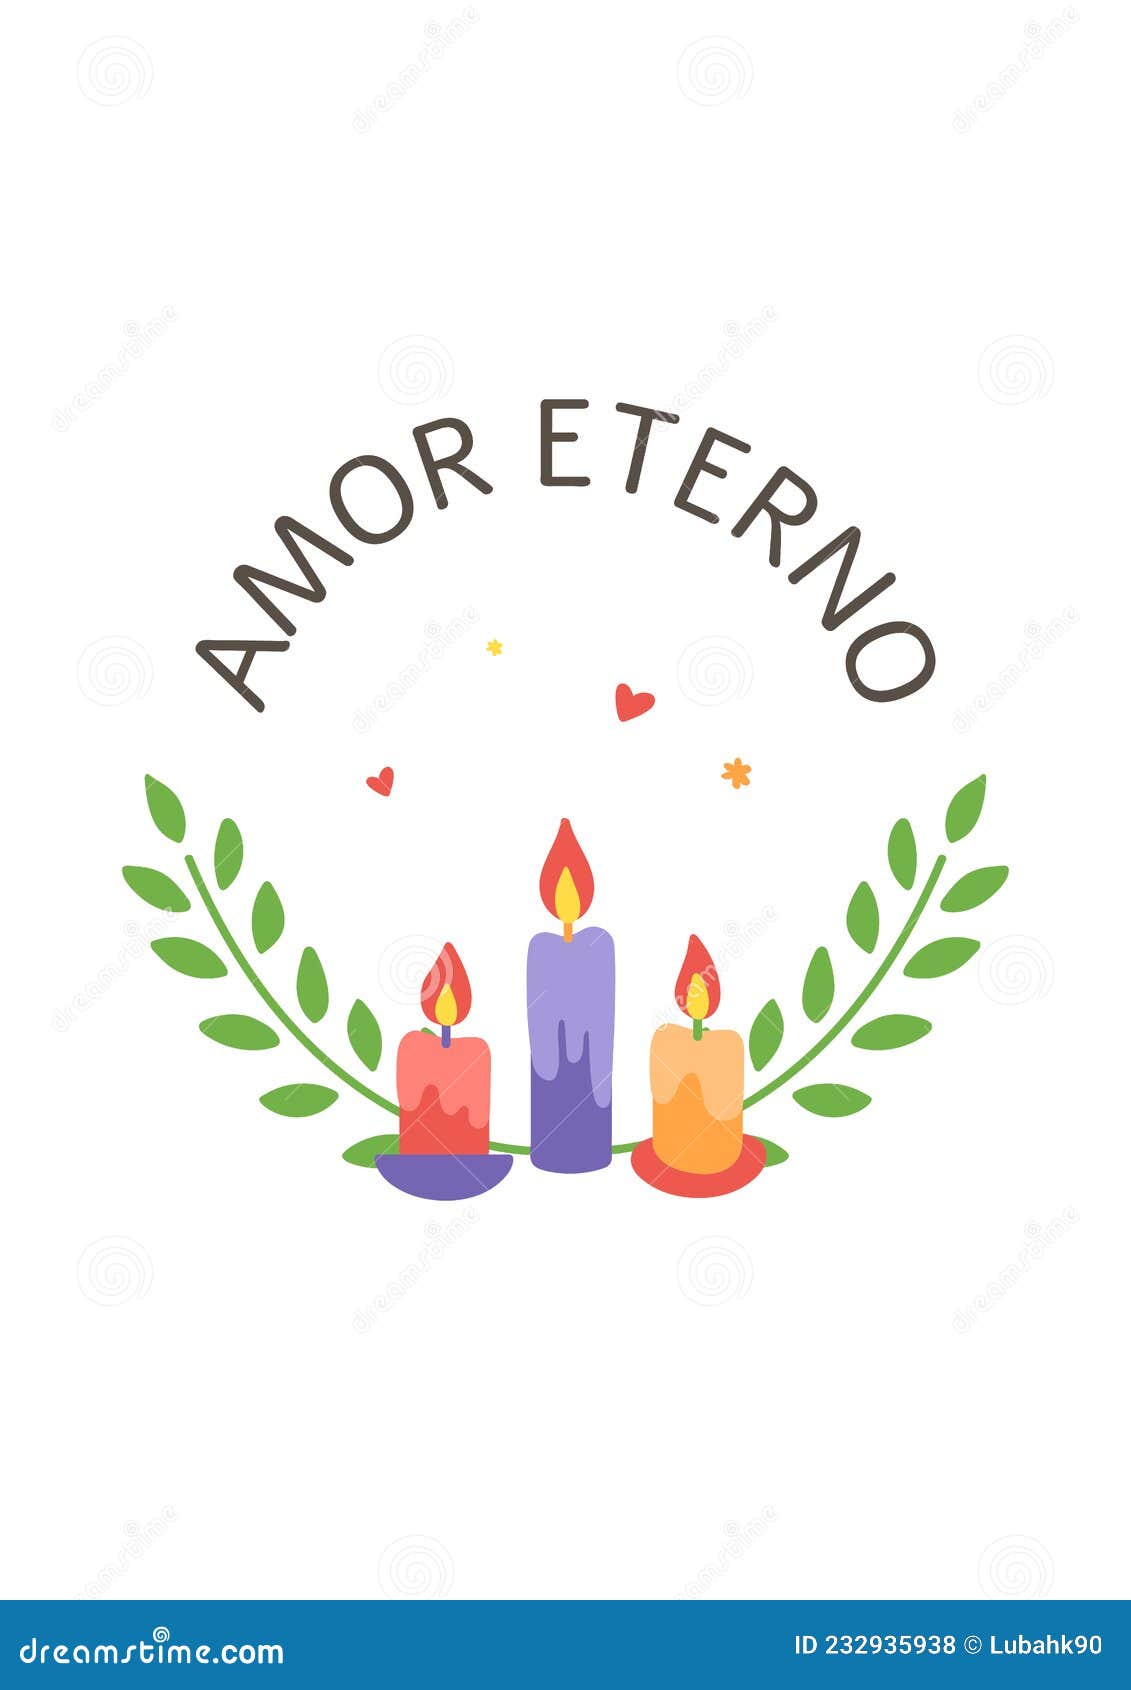 amor eterno card. day of the dead poster. dia de muertos skull print. mexican party. embroidery banner. cinco de mayo